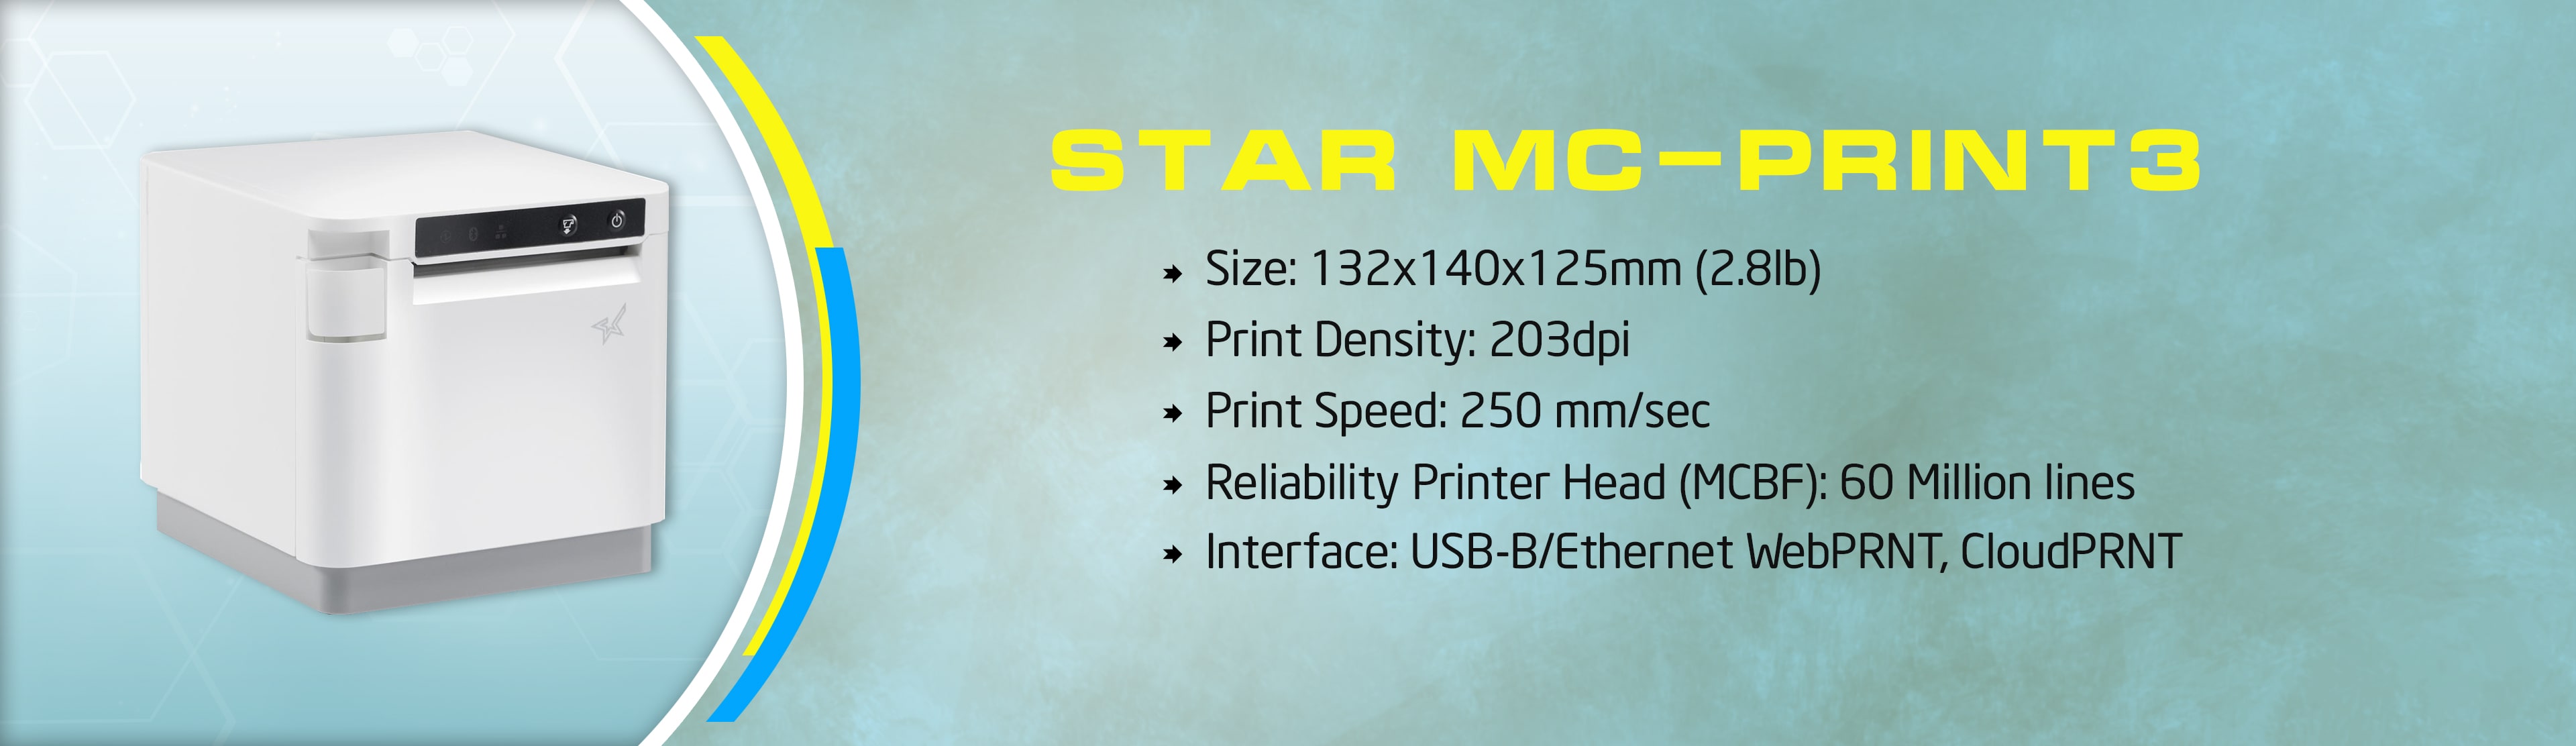 Star mC-Print3